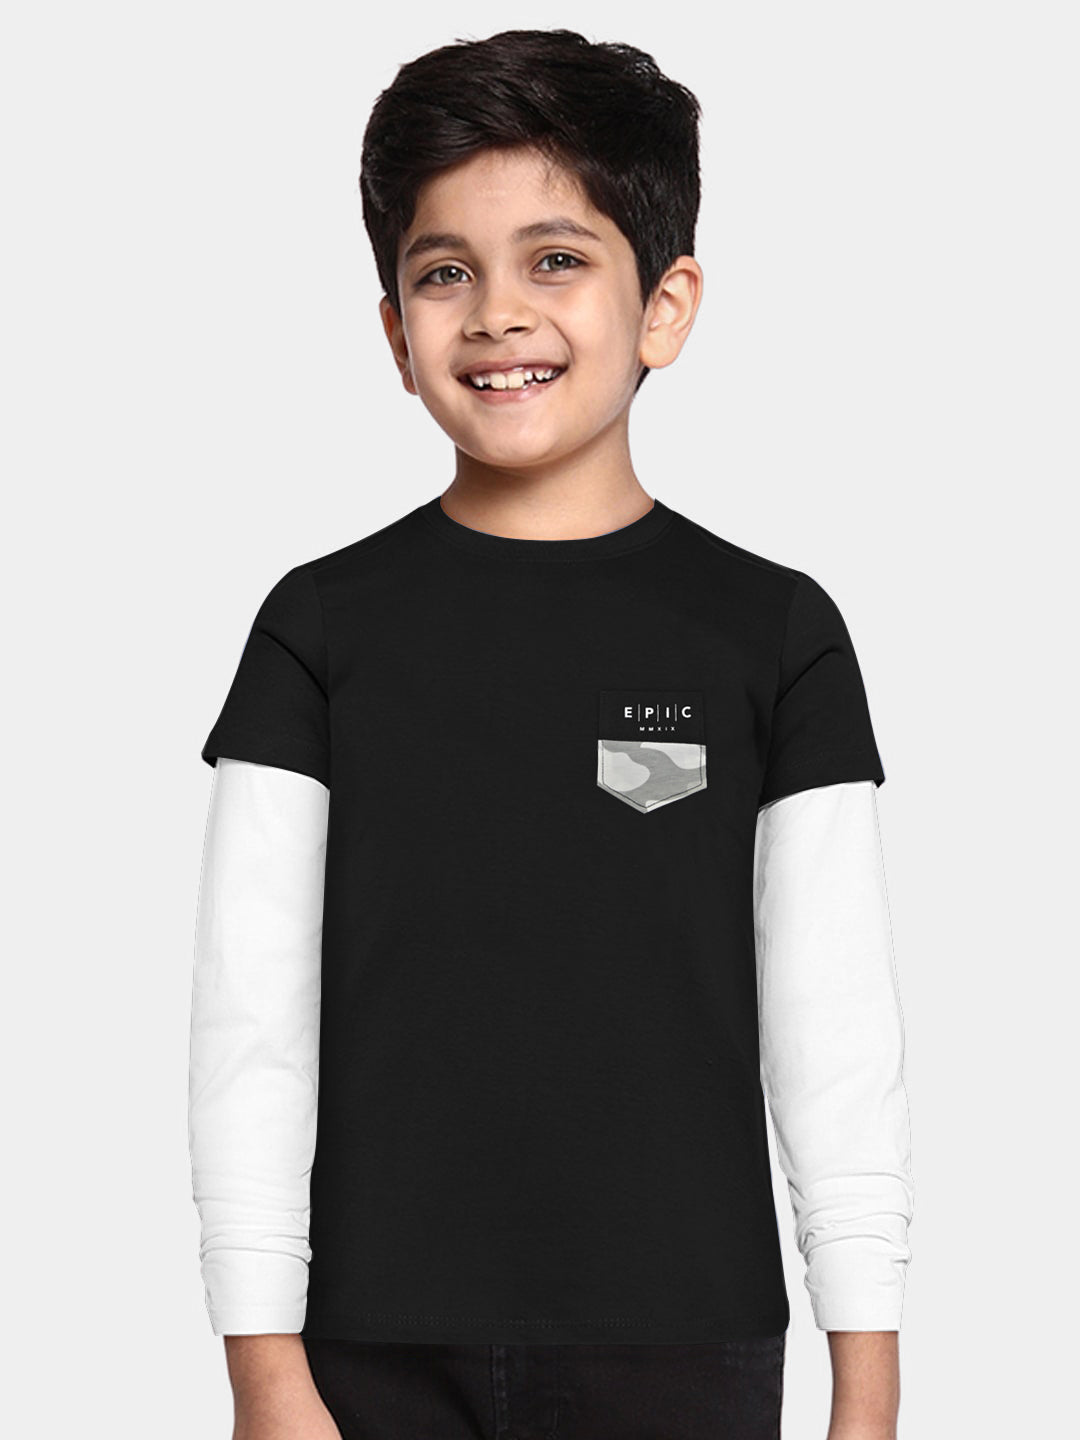 Maxx Crew Neck Long Sleeve Single Jersey Tee Shirt For Kids-Black & White-SP207/RT2114